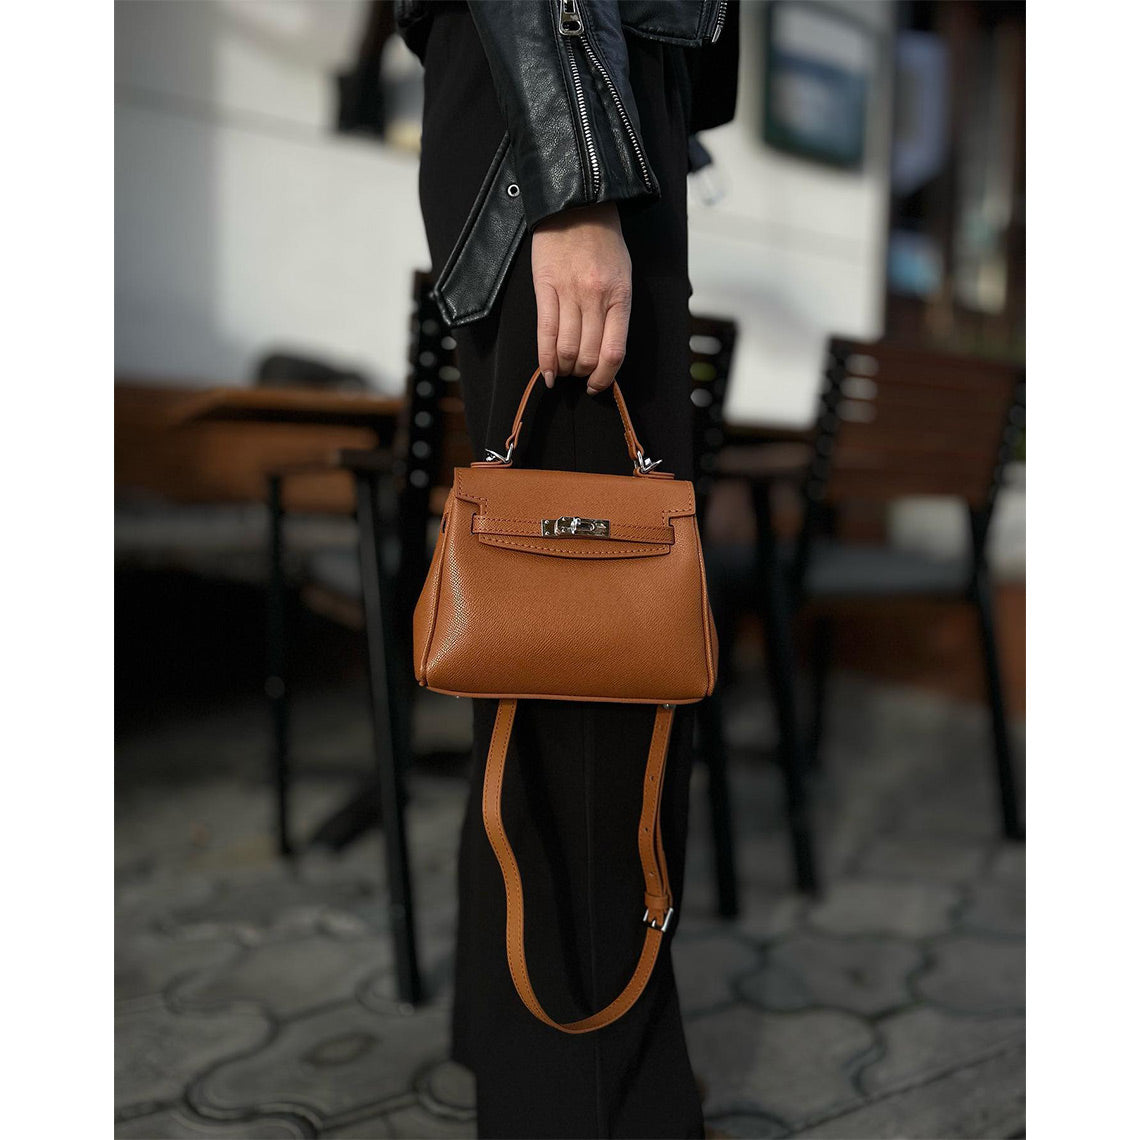 POPSEWING® Handmade Leather Kelly Bag  DIY Kit | DIY Gift for Women